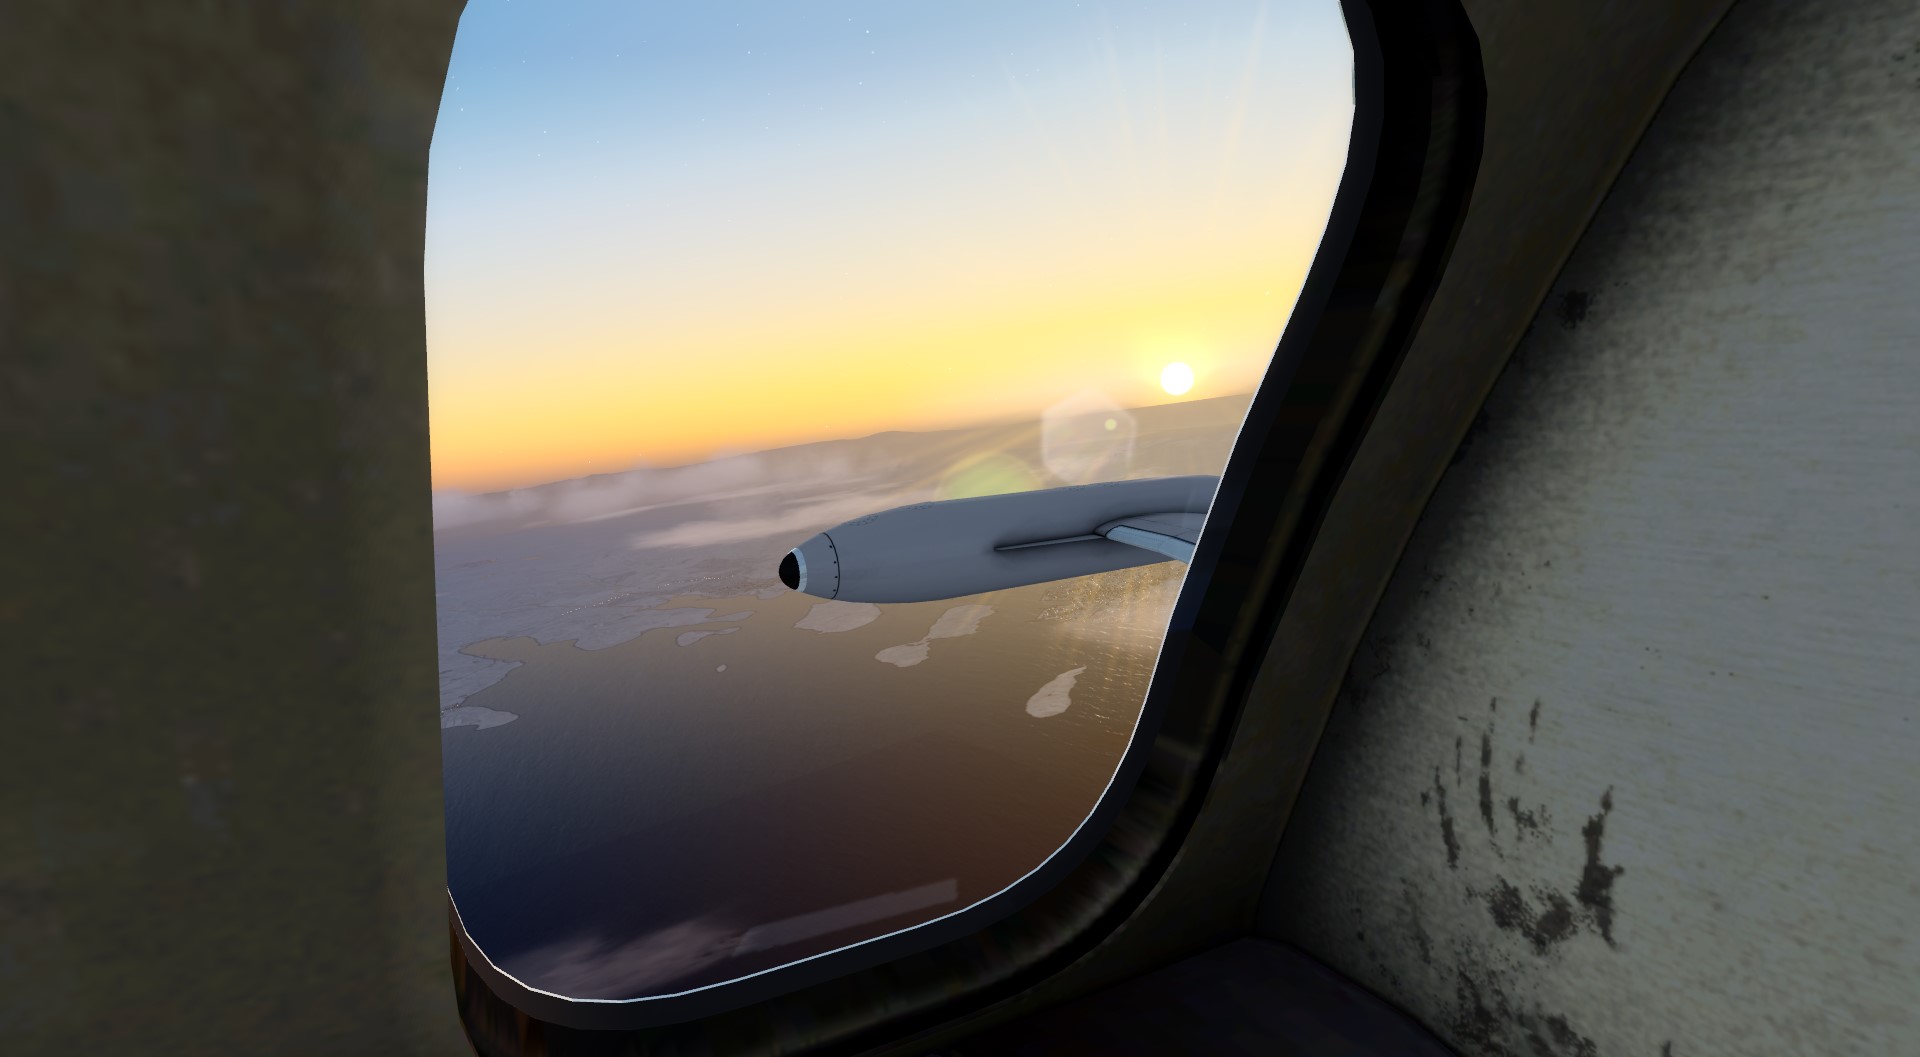 Flysimware – Learjet 35A 评测与冰岛送货之旅-8788 